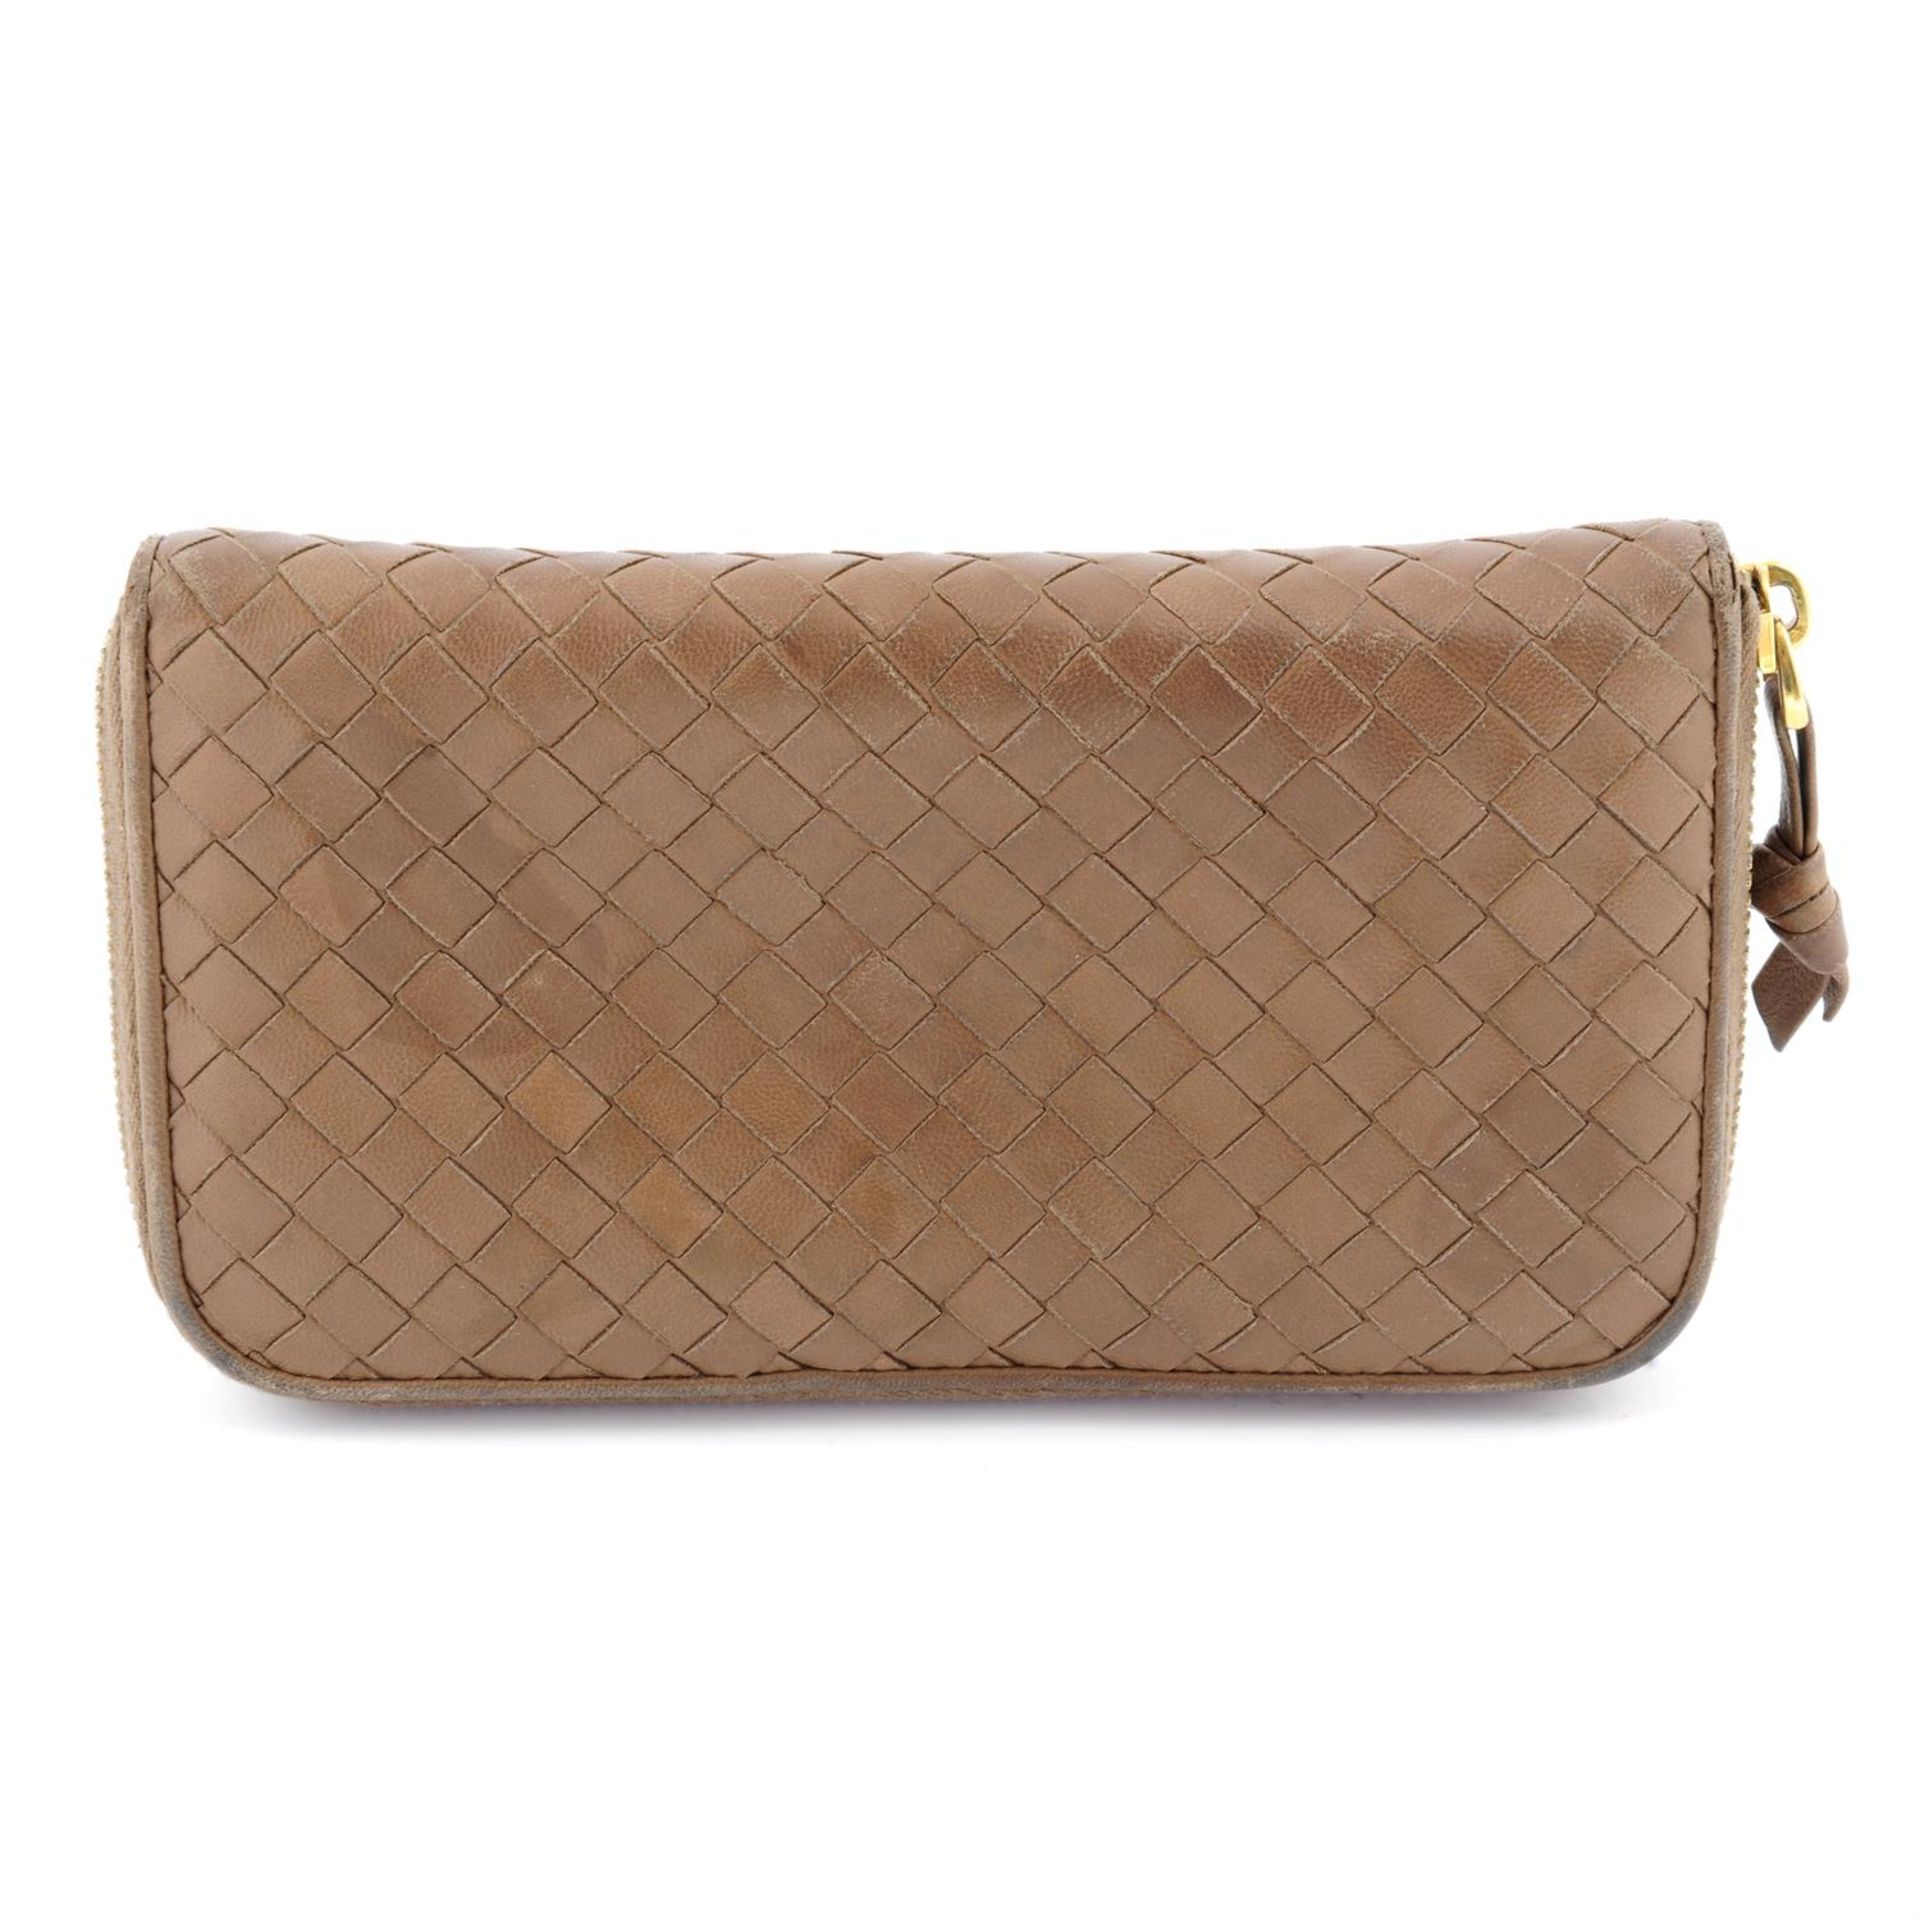 BOTTEGA VENETA - a Intrecciato leather Zippy wallet. - Image 2 of 4